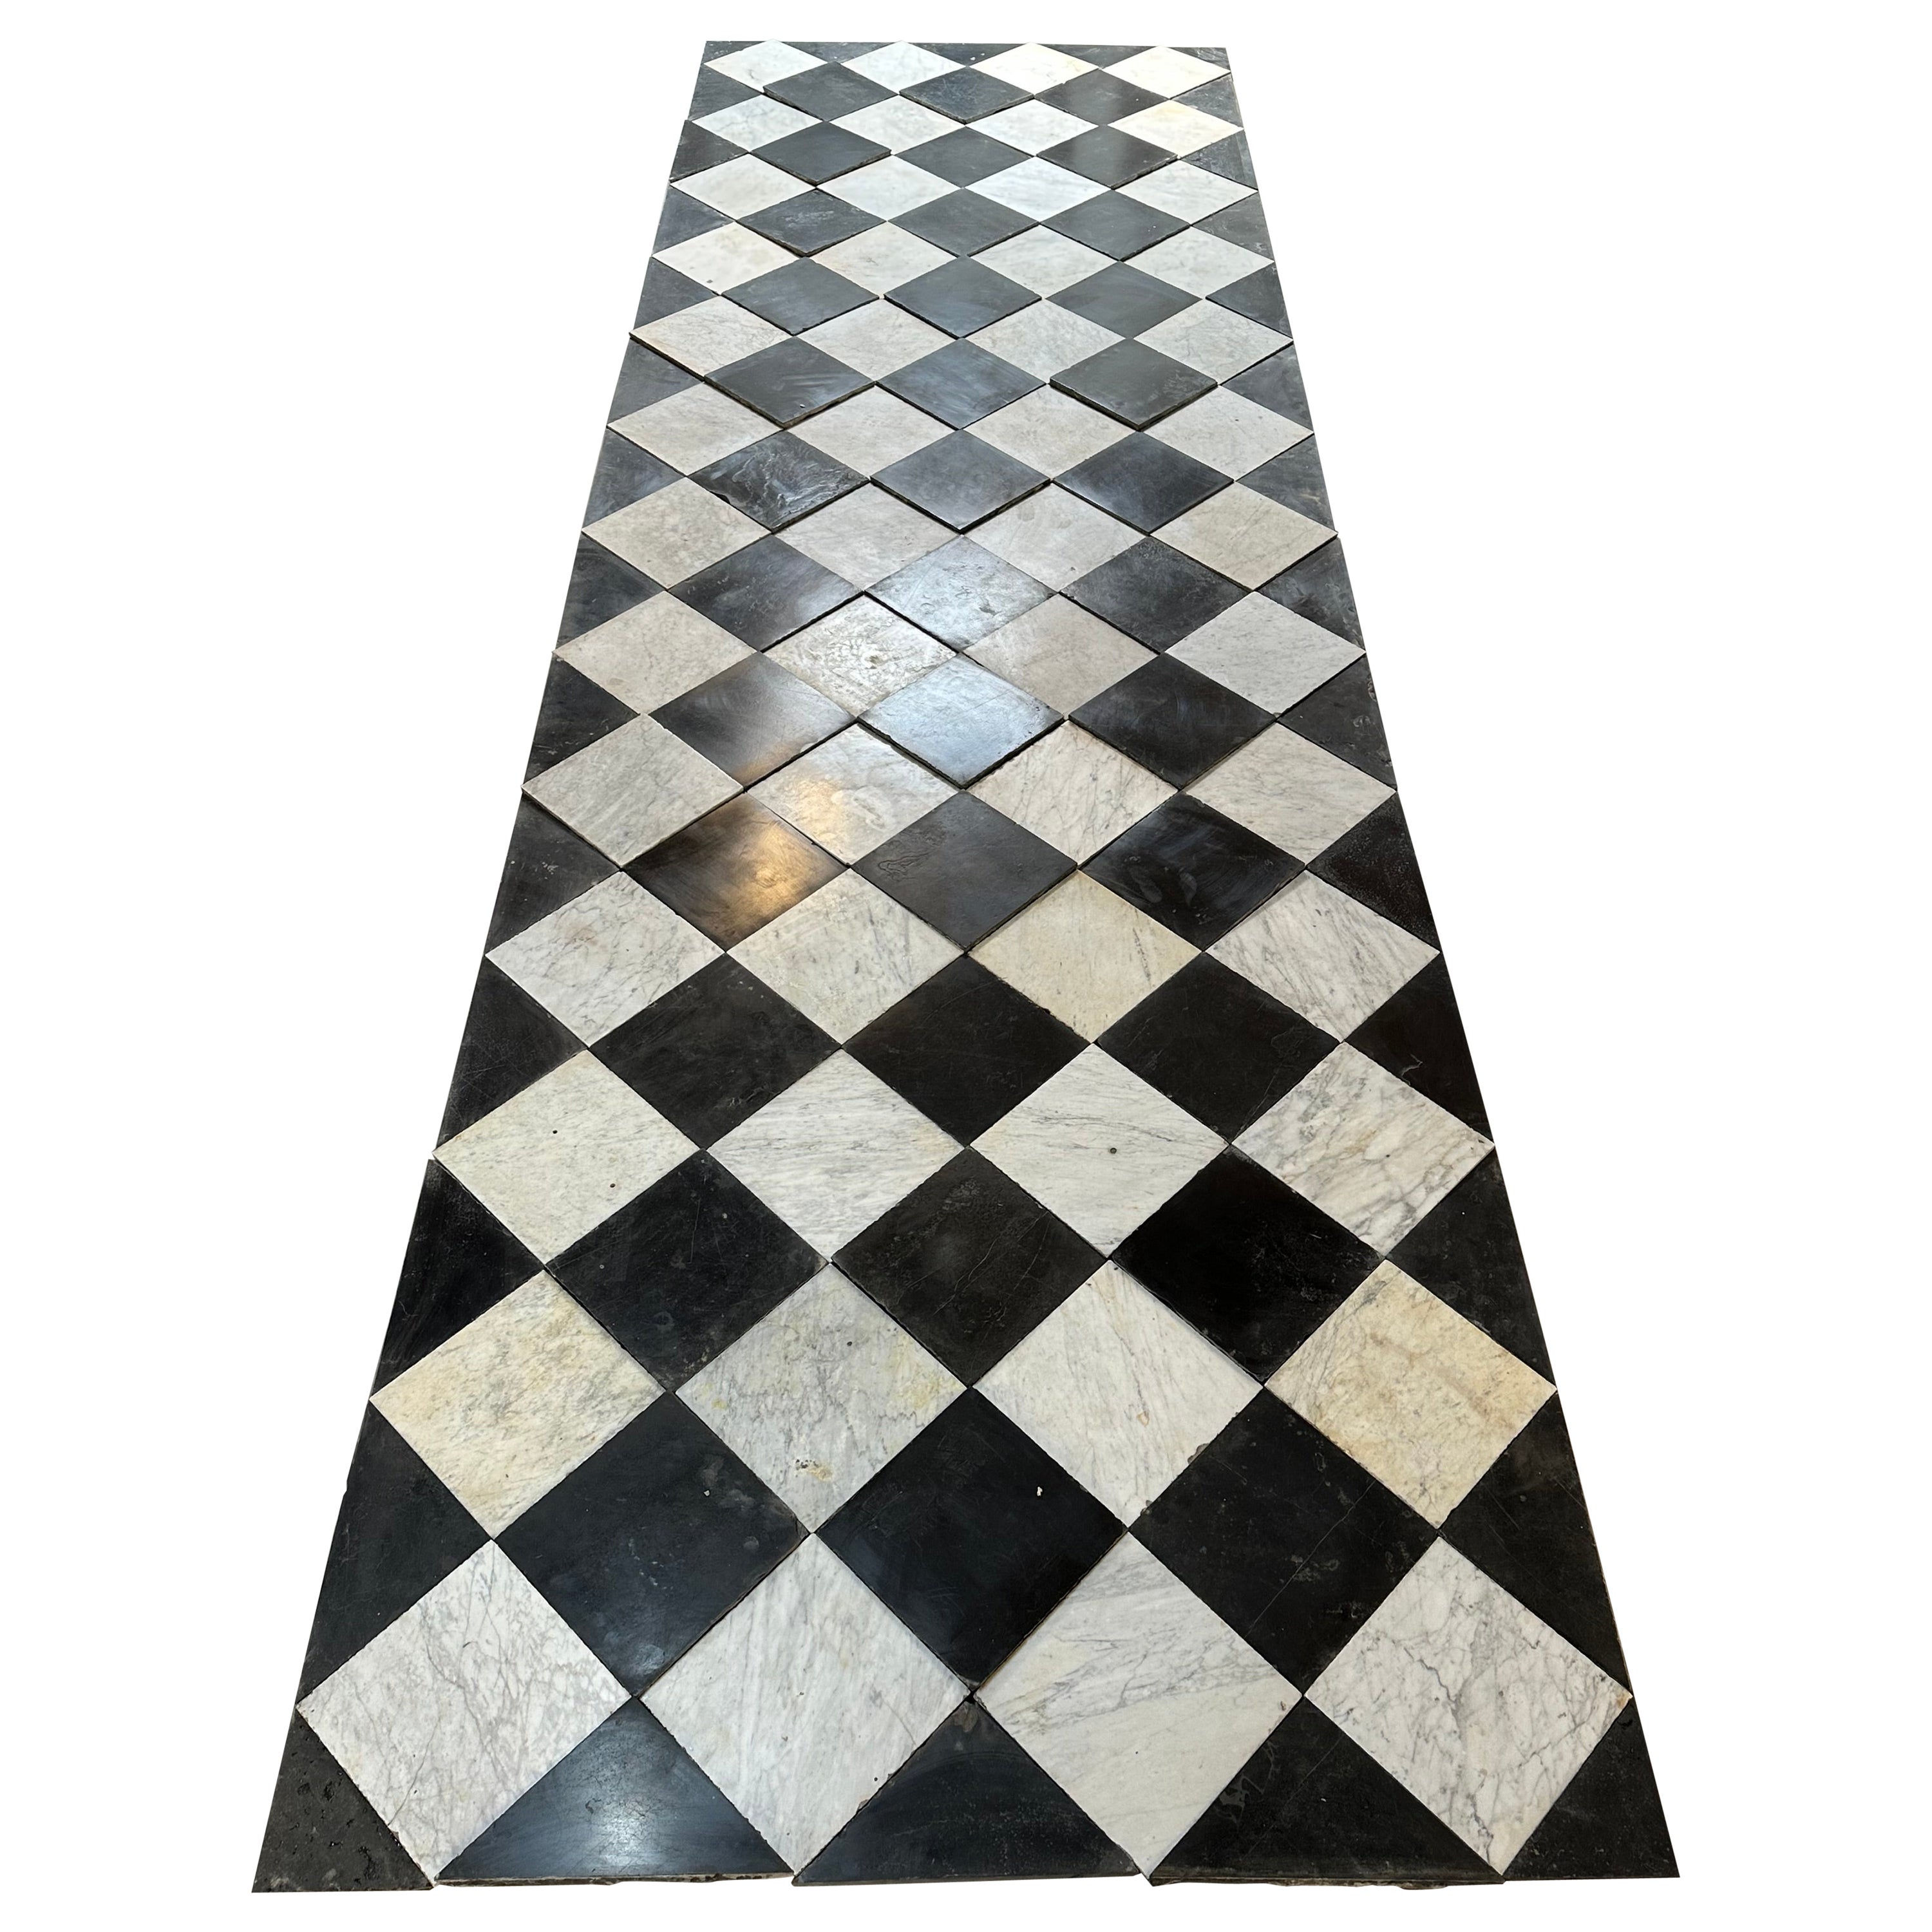 Antique Checkered Black an White Marble Tiles